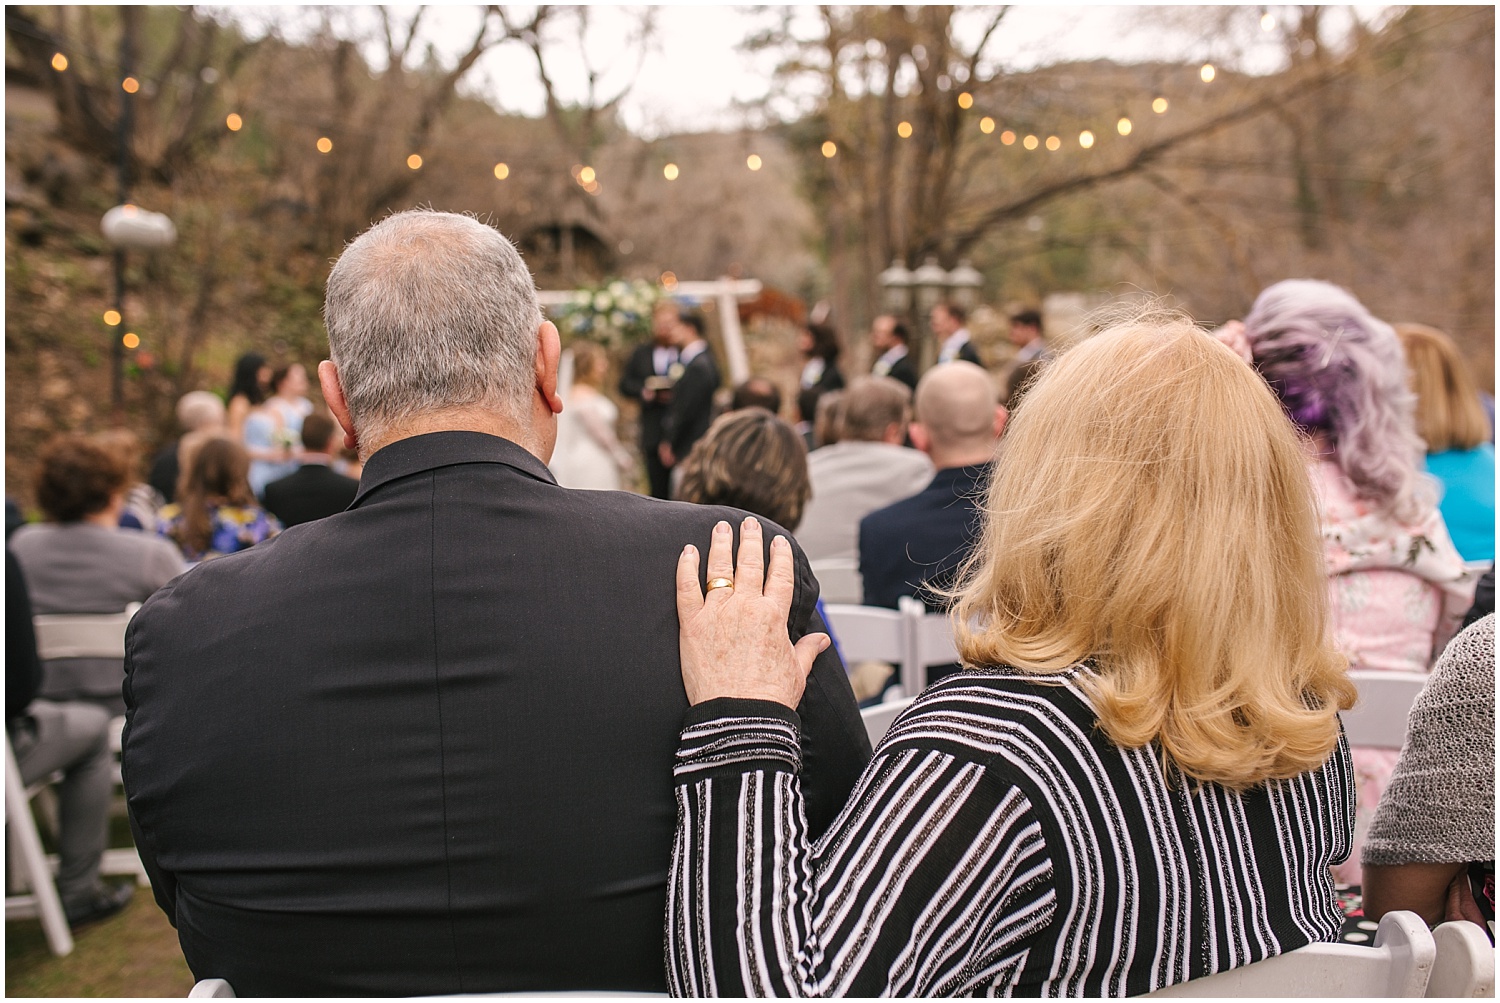 Spring wedding ceremony by the creek at Wedgewood Weddings Boulder Creek wedding venue